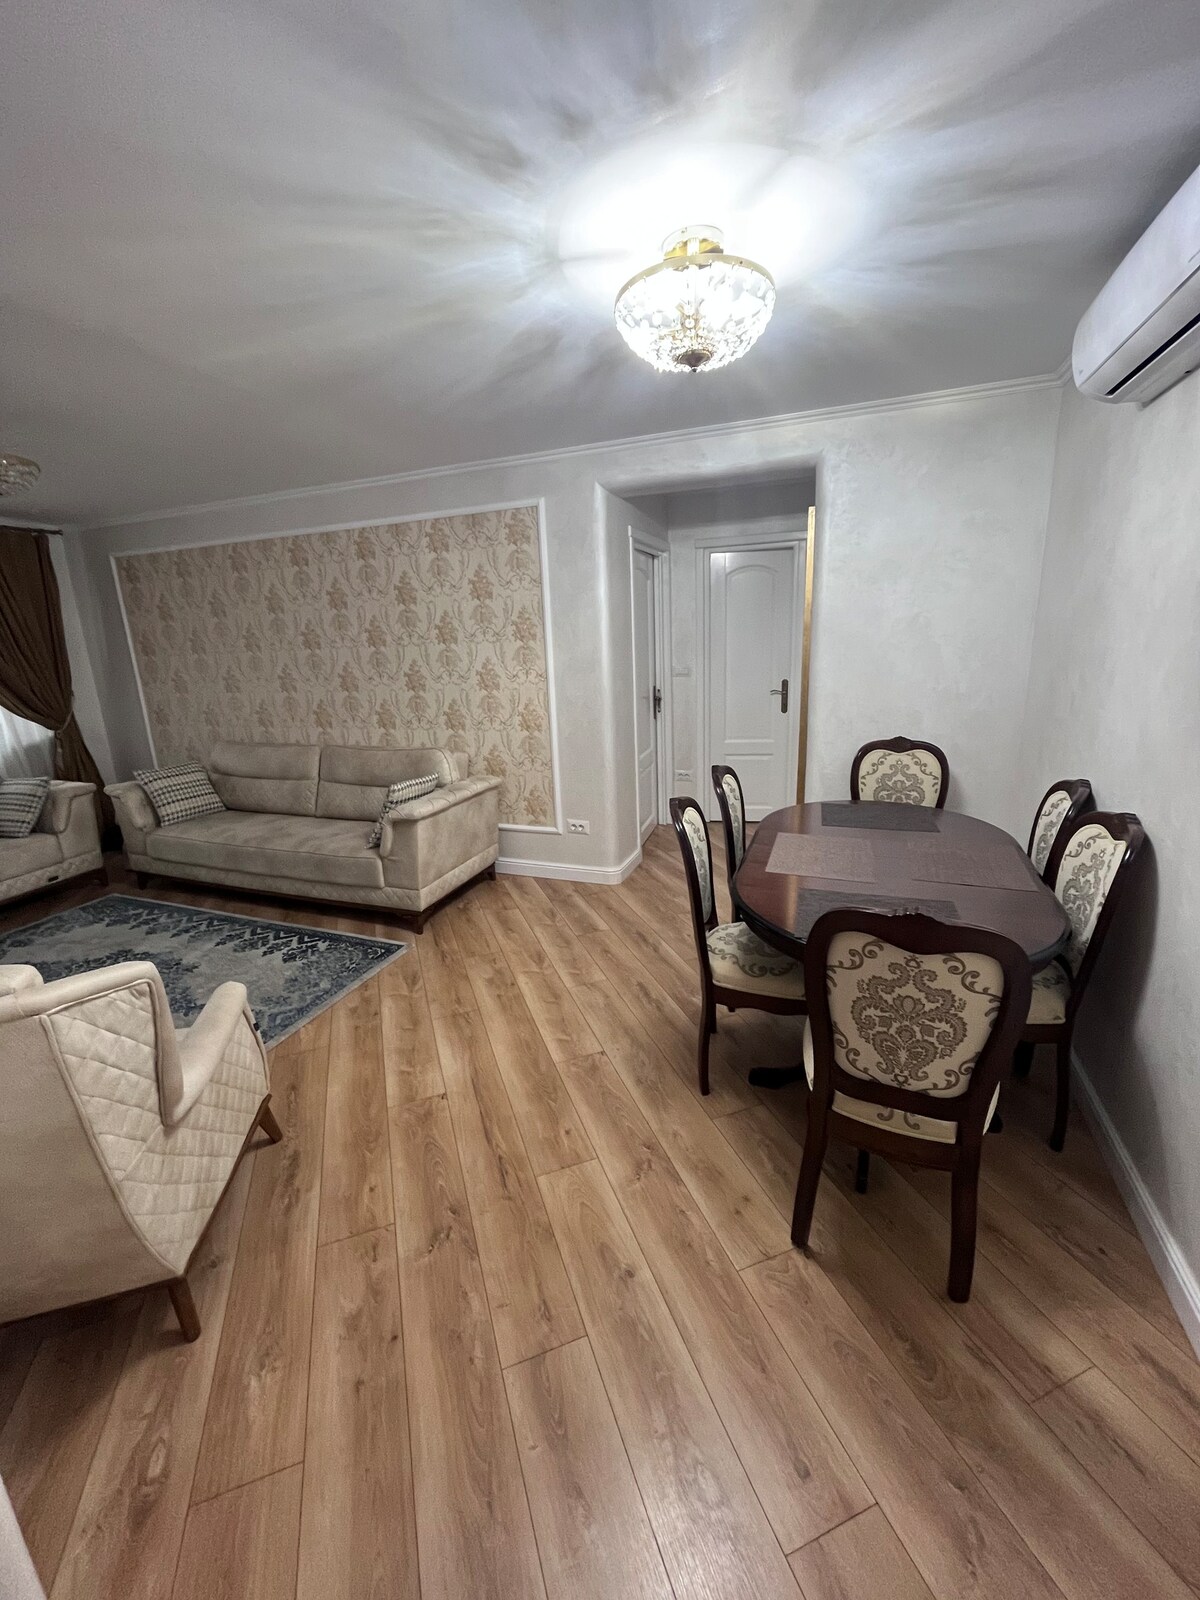 Apartament în Botoșani